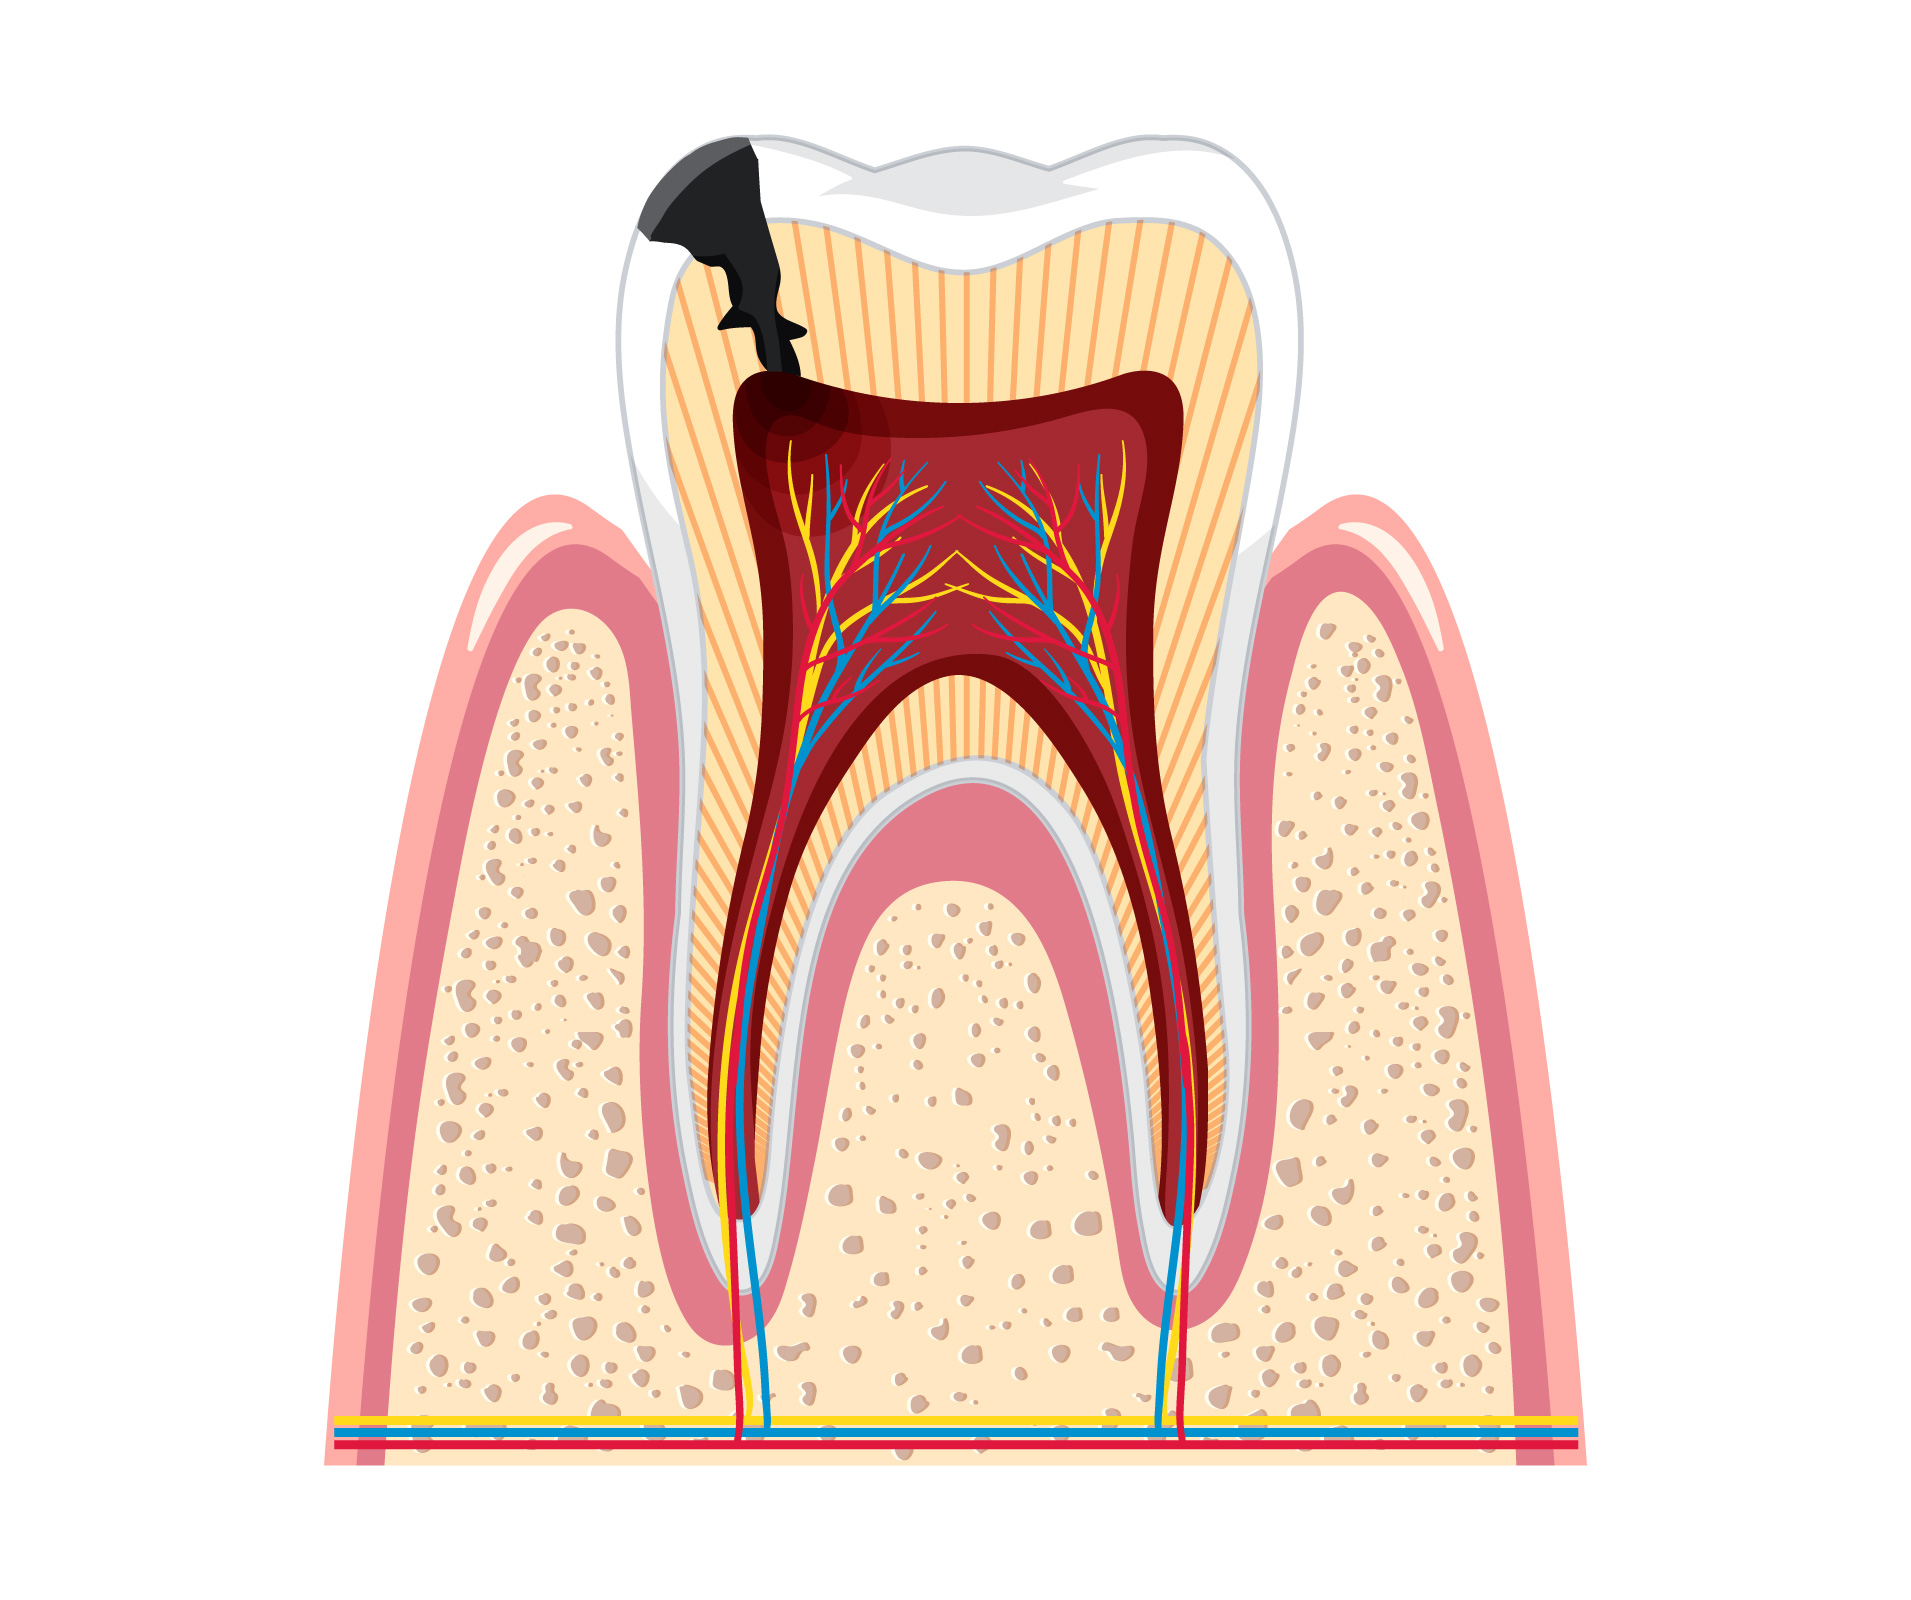 Endodonzia---Struttura-interna-dente-